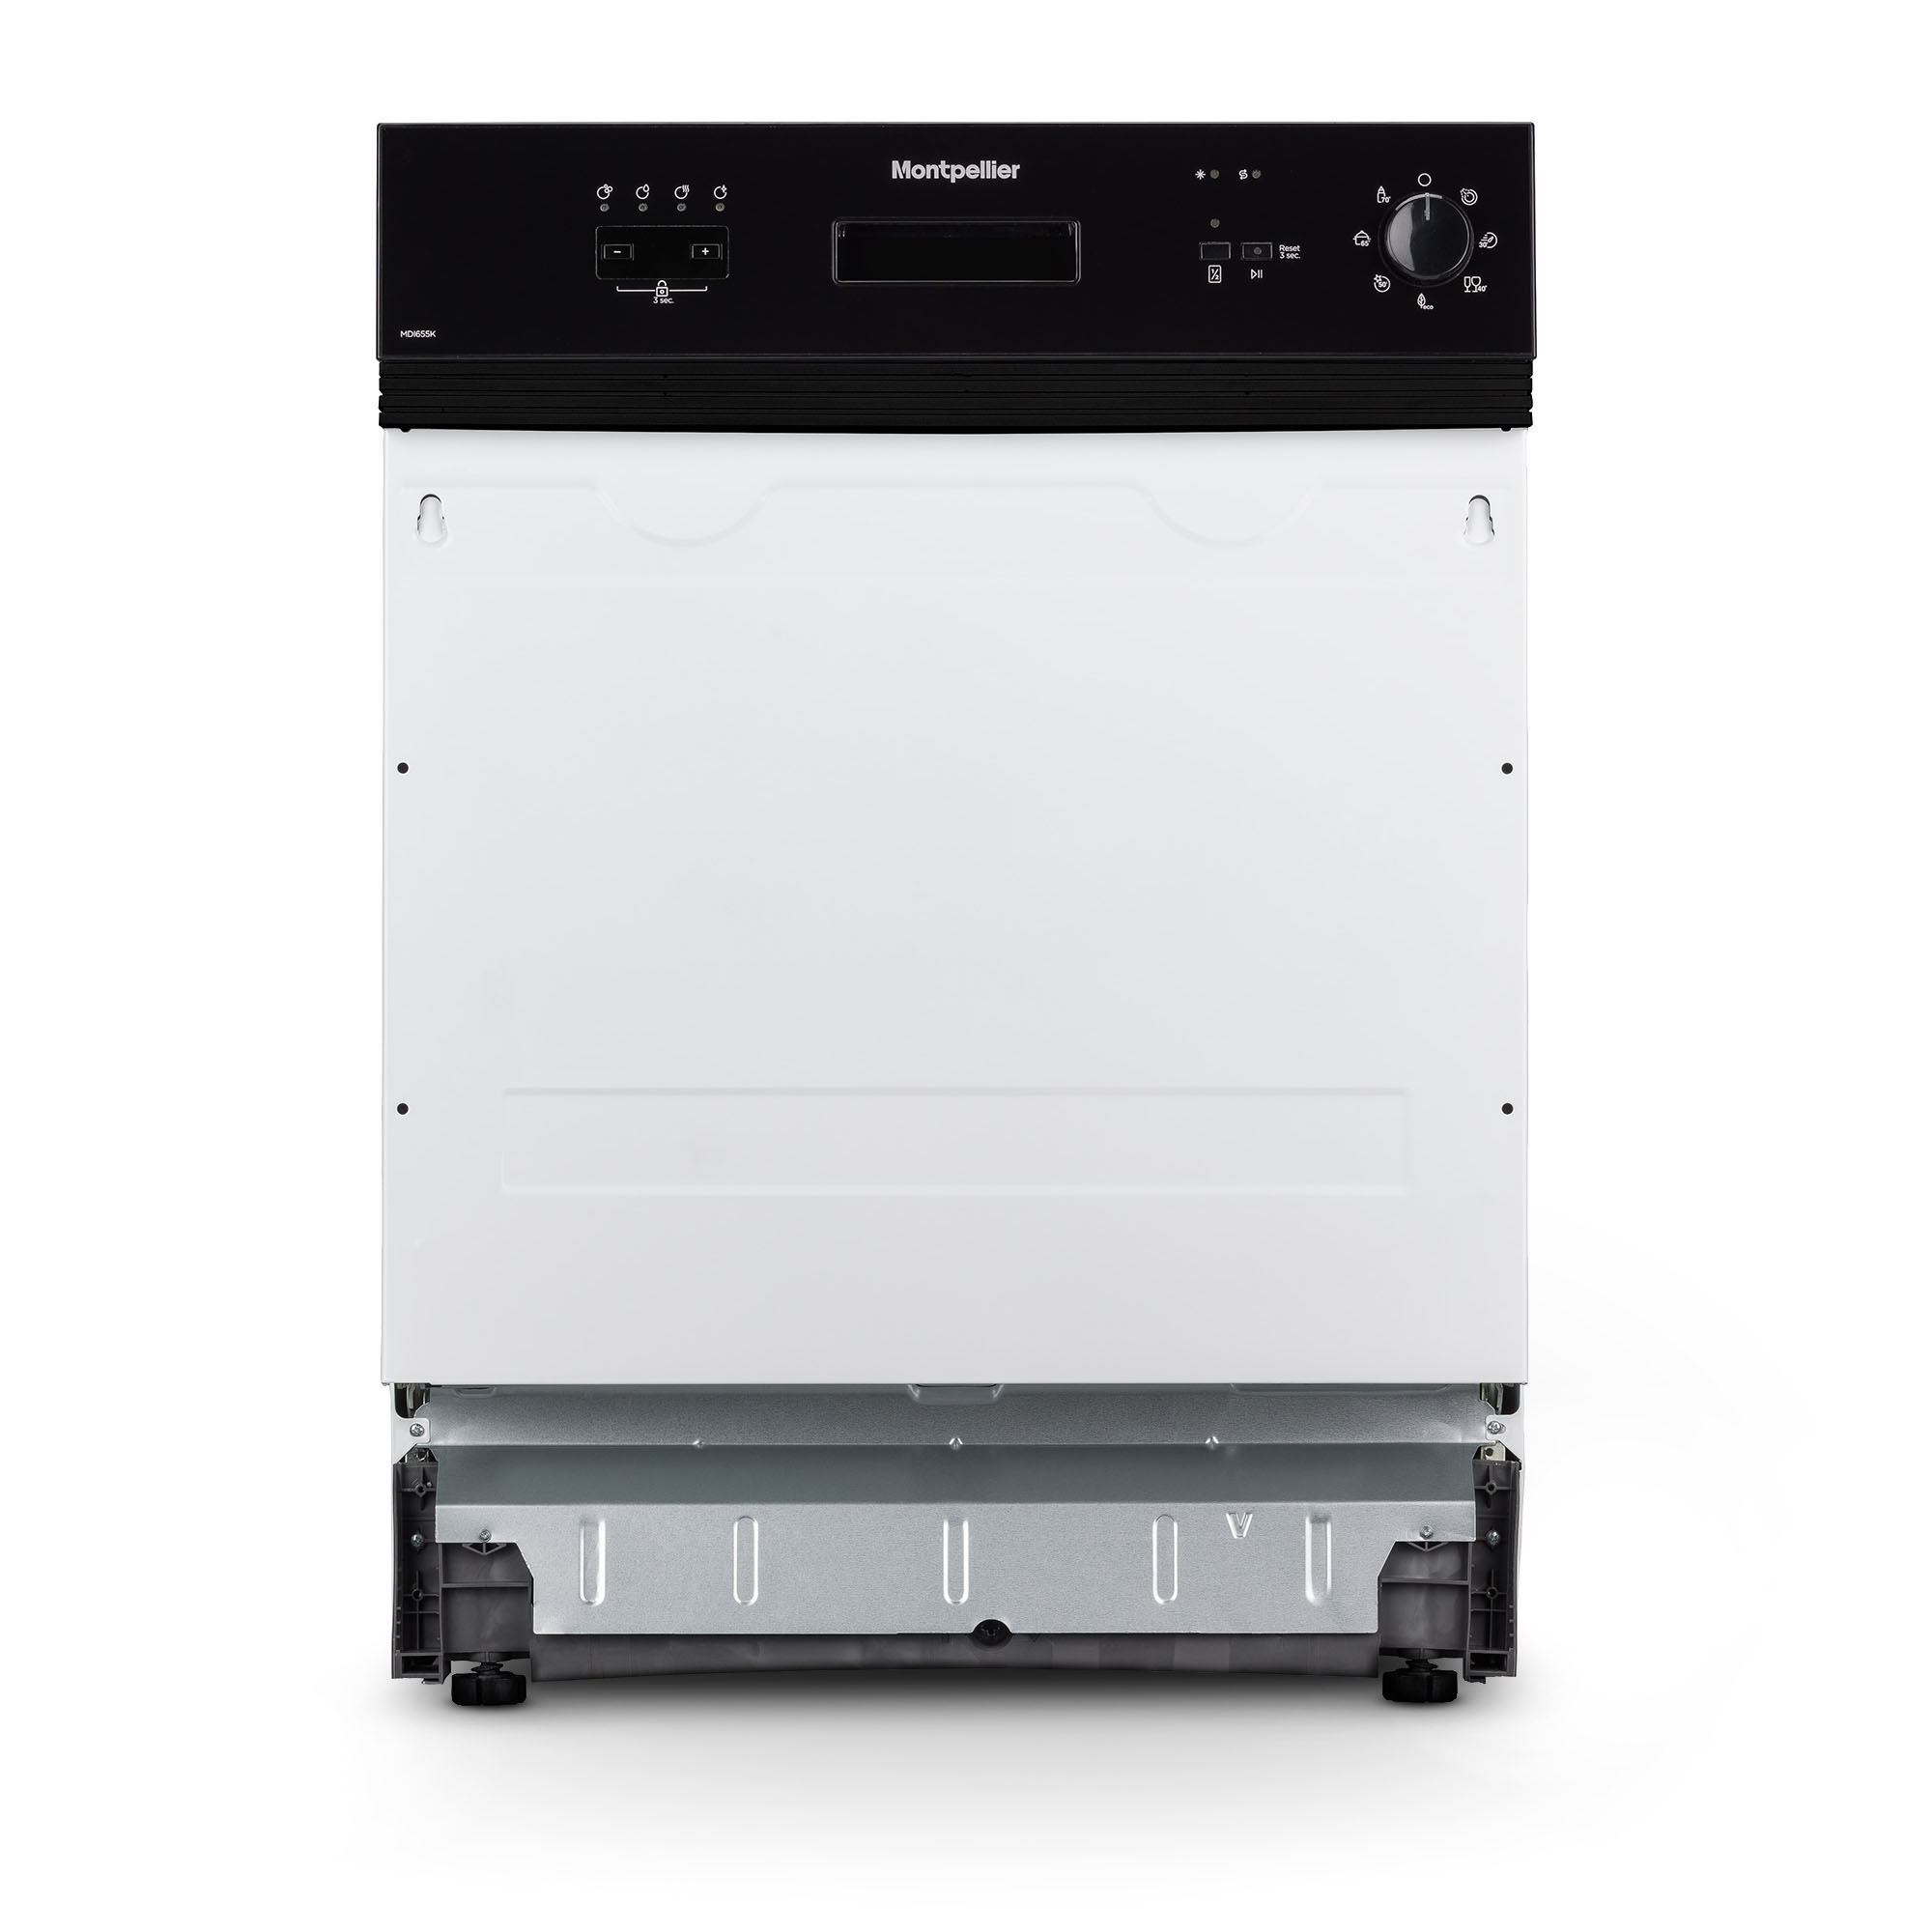  Montpellier MDI655K Full Size 60cm Semi Integrated Dishwasher in Black